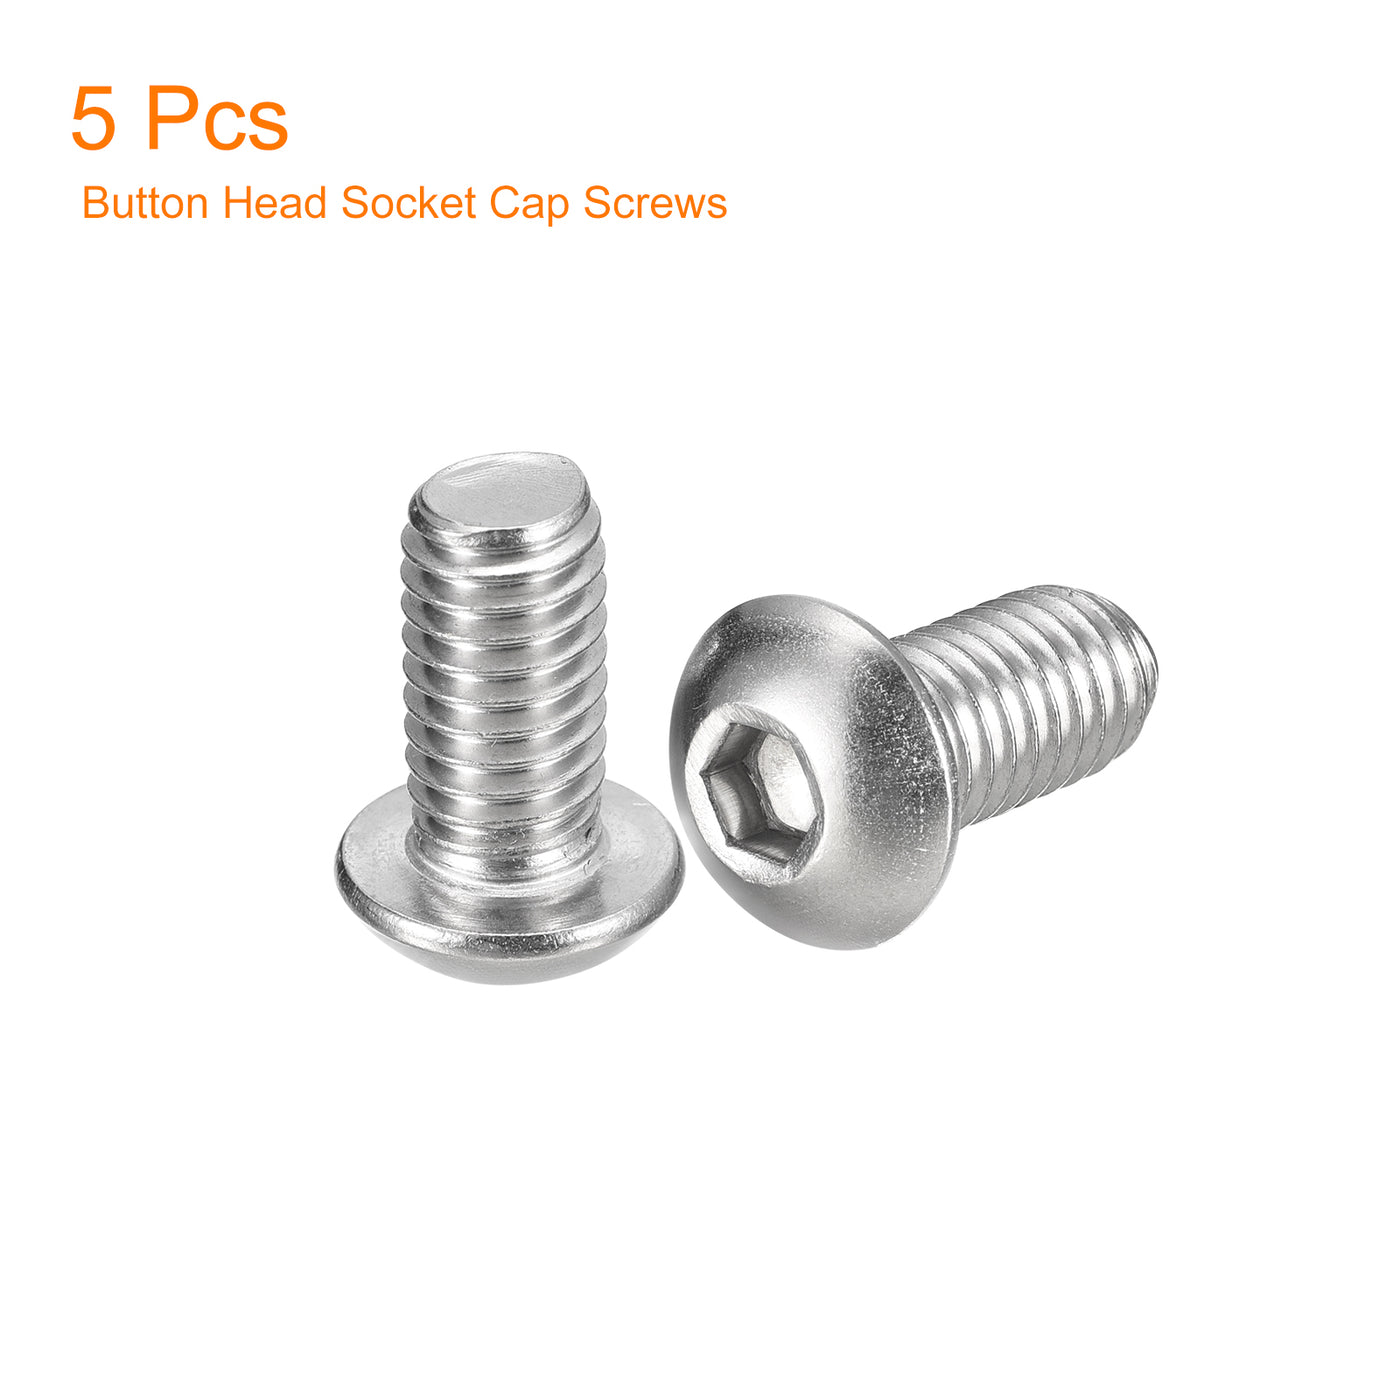 uxcell Uxcell 3/8-16x3/4" Button Head Socket Cap Screws, 5pcs 304 Stainless Steel Screws